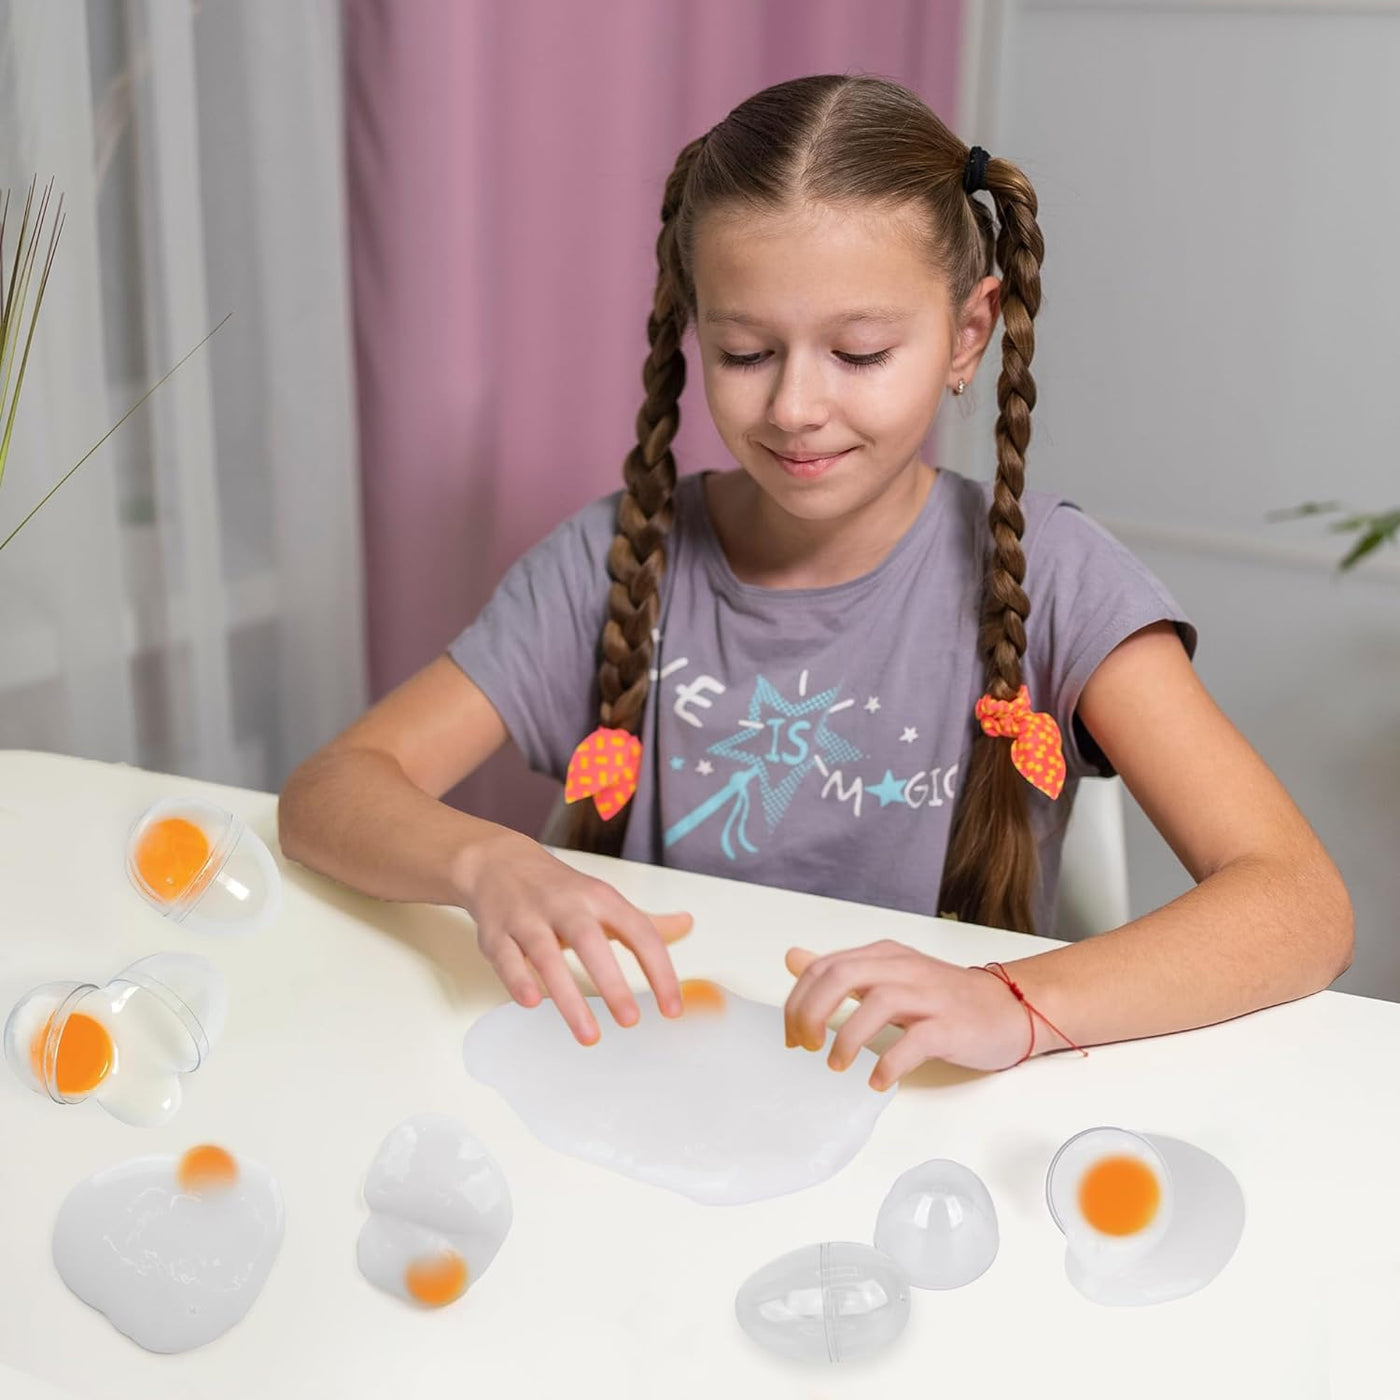 Easter Slime Eggs - Set of 12 Slime Filled Eggs - Pre-Filled Surprise Eggs for Kids with Slime Inside